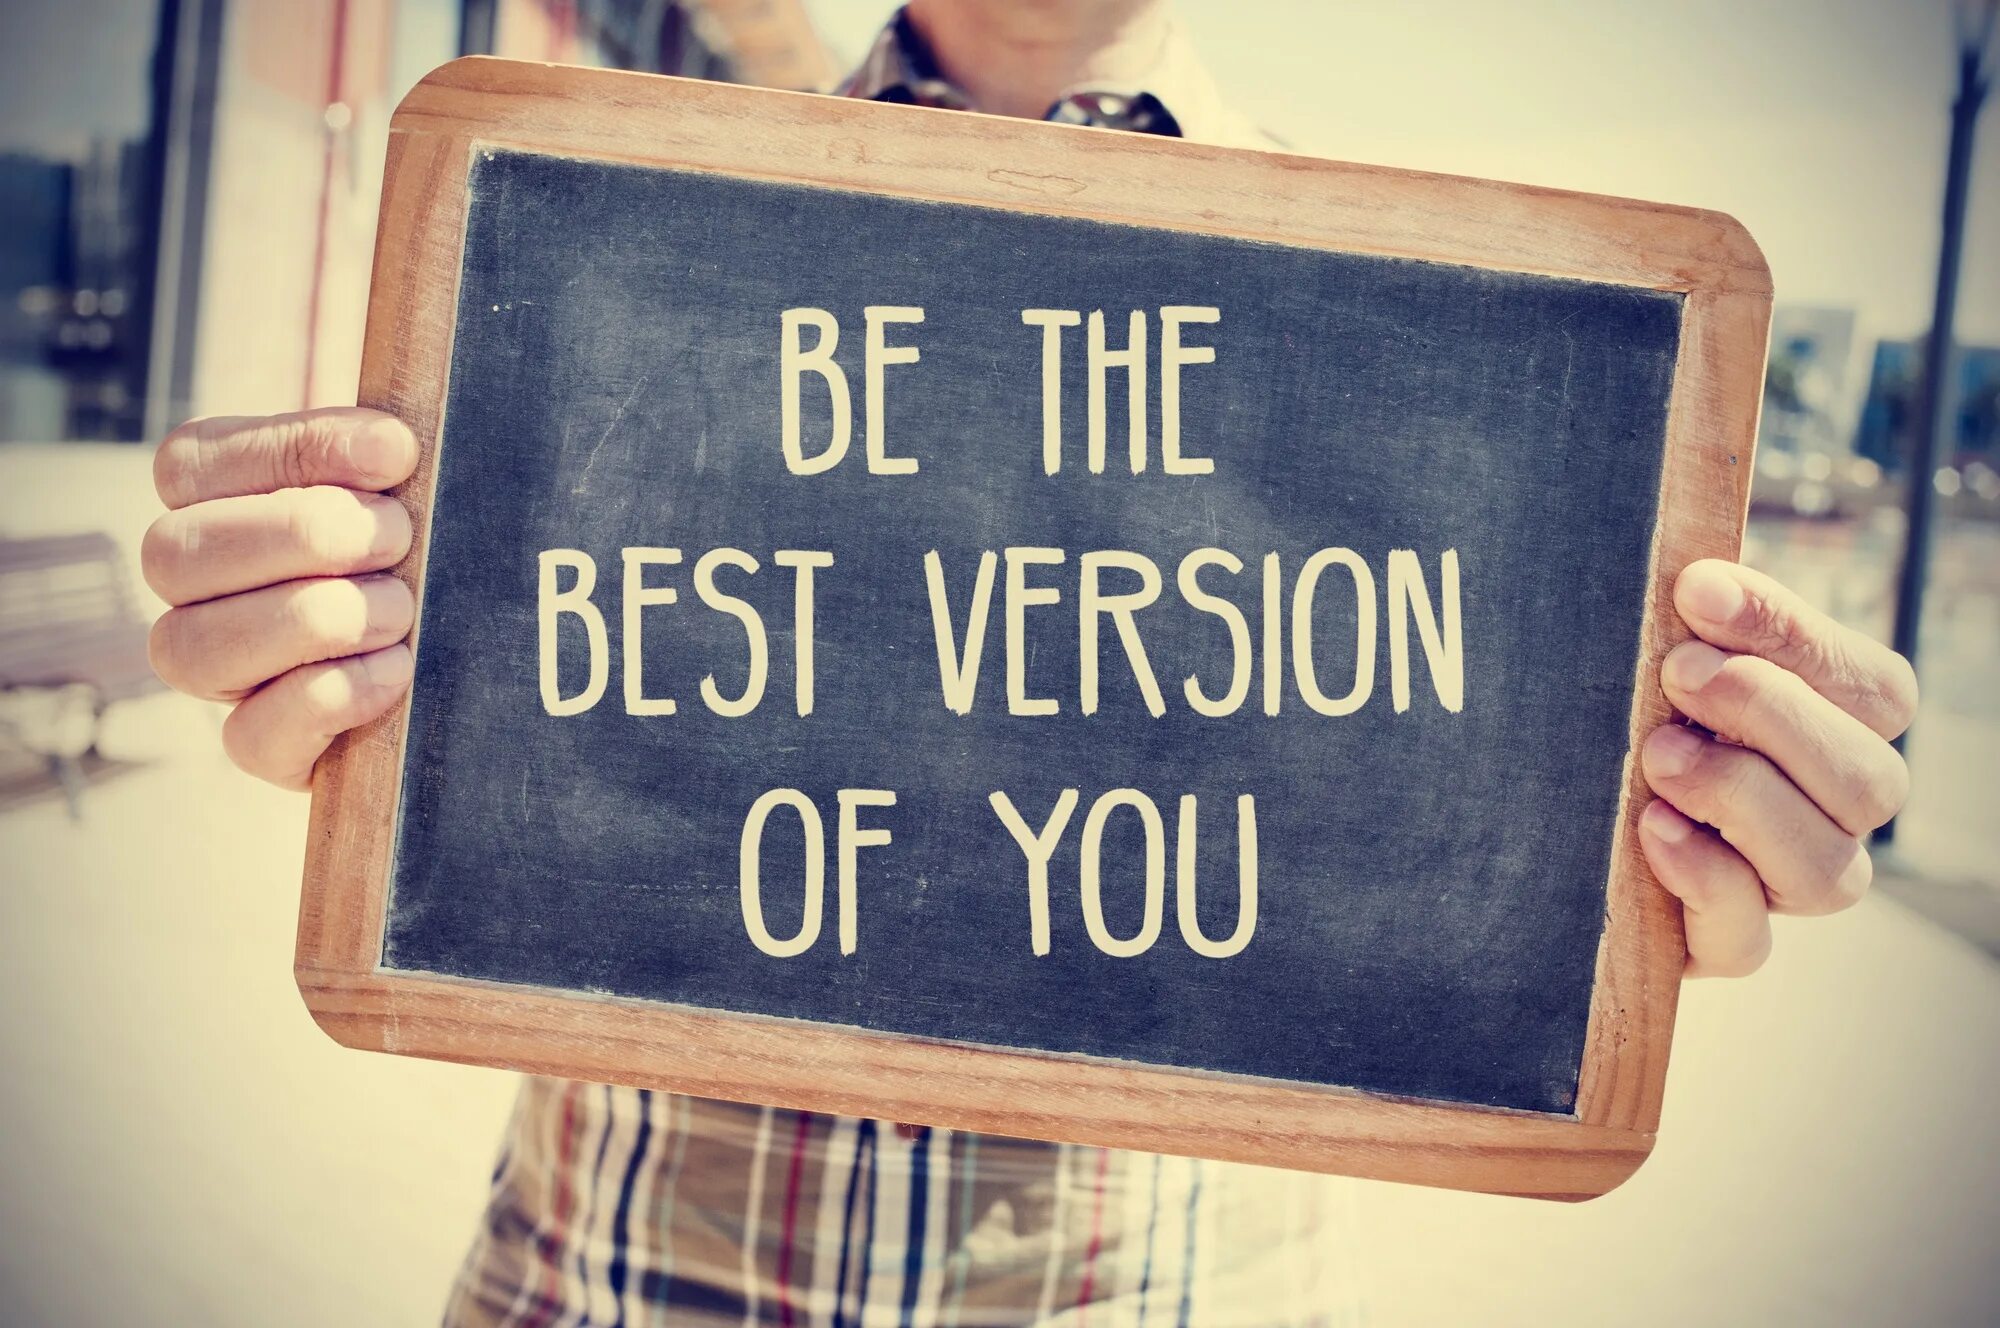 Are making our life better. Be you!. Be the best Version of yourself обои. Мотивационные картинки. Стань лучшей версией себя на английском.